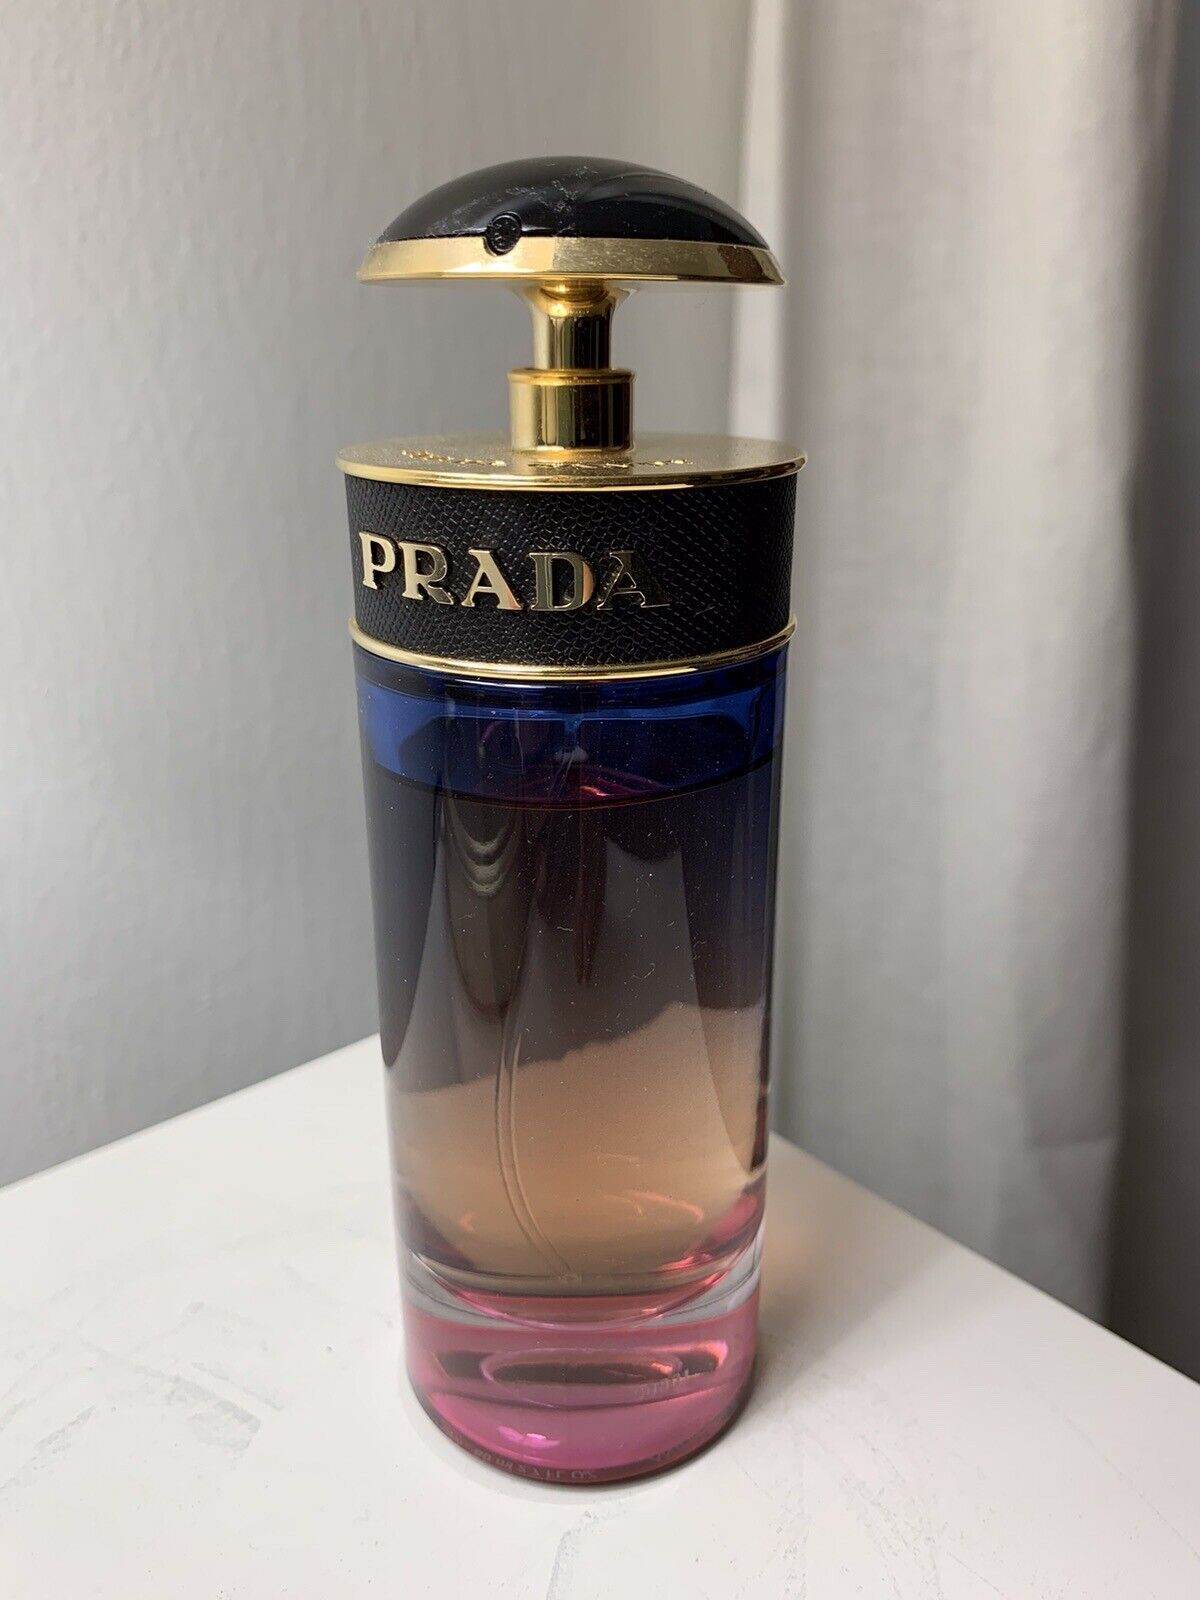 Prada Candy Night Eau De Parfum 80ml 2.7 fl oz Perfume